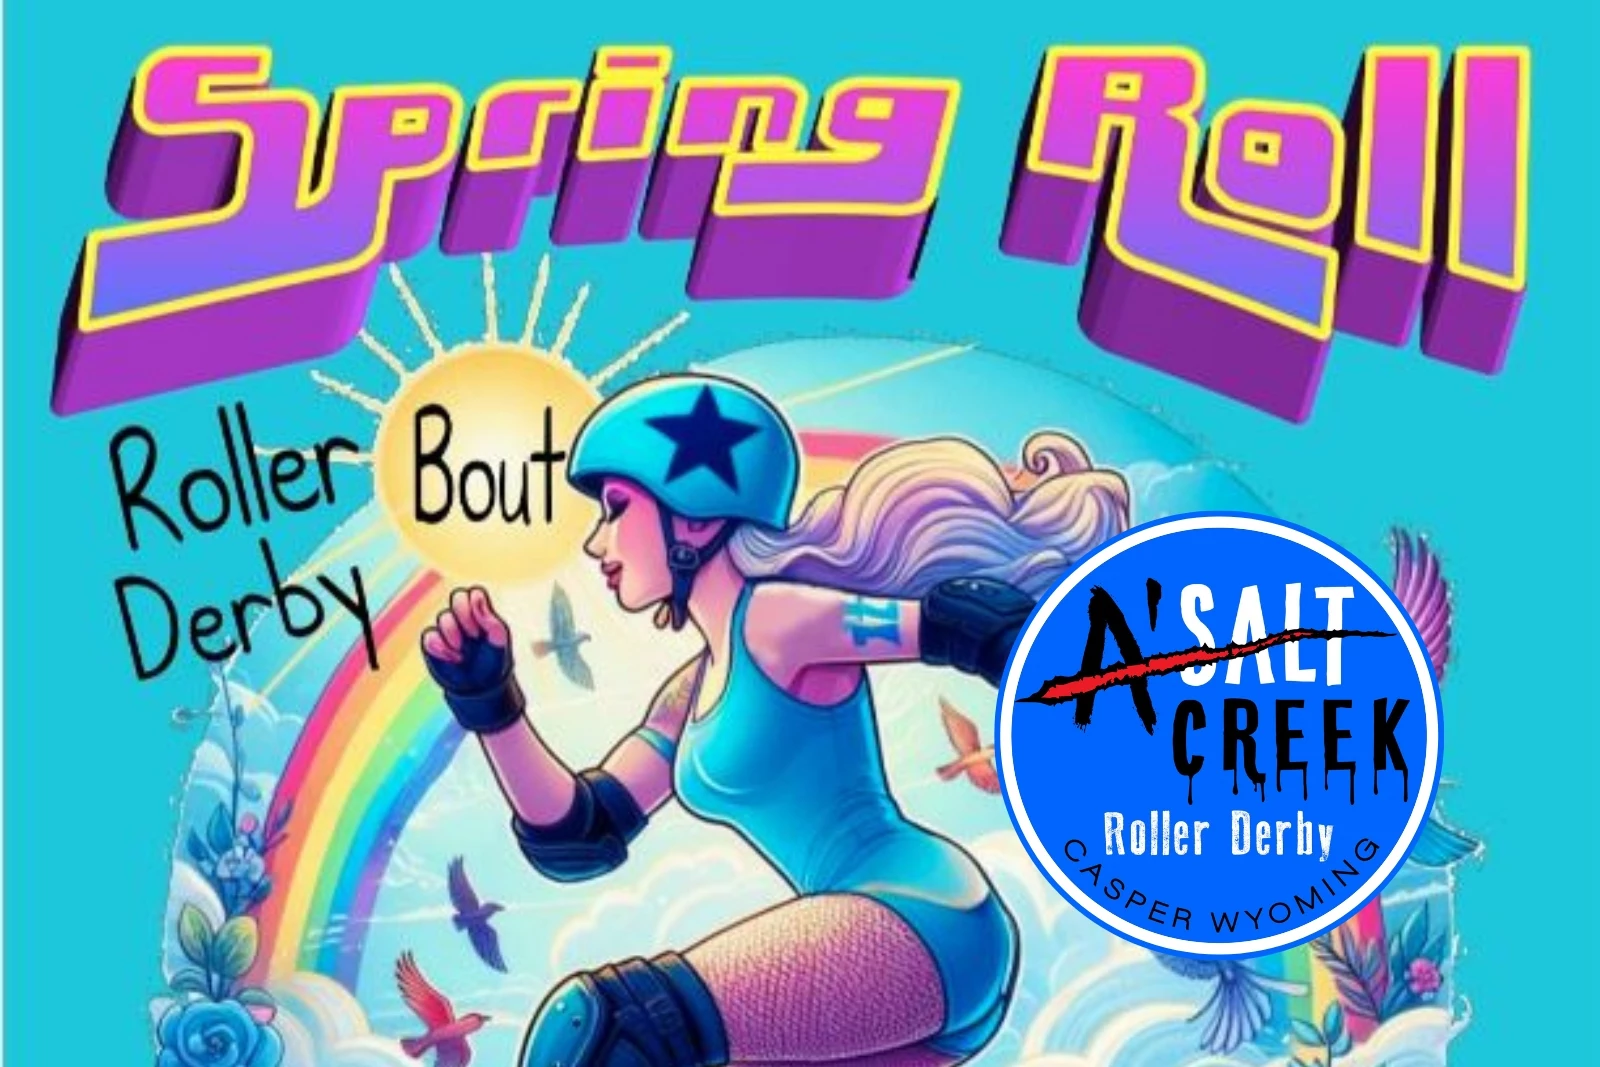 A’Salt Creek Roller Derby ‘Spring Roll’ Event This Saturday in
Casper